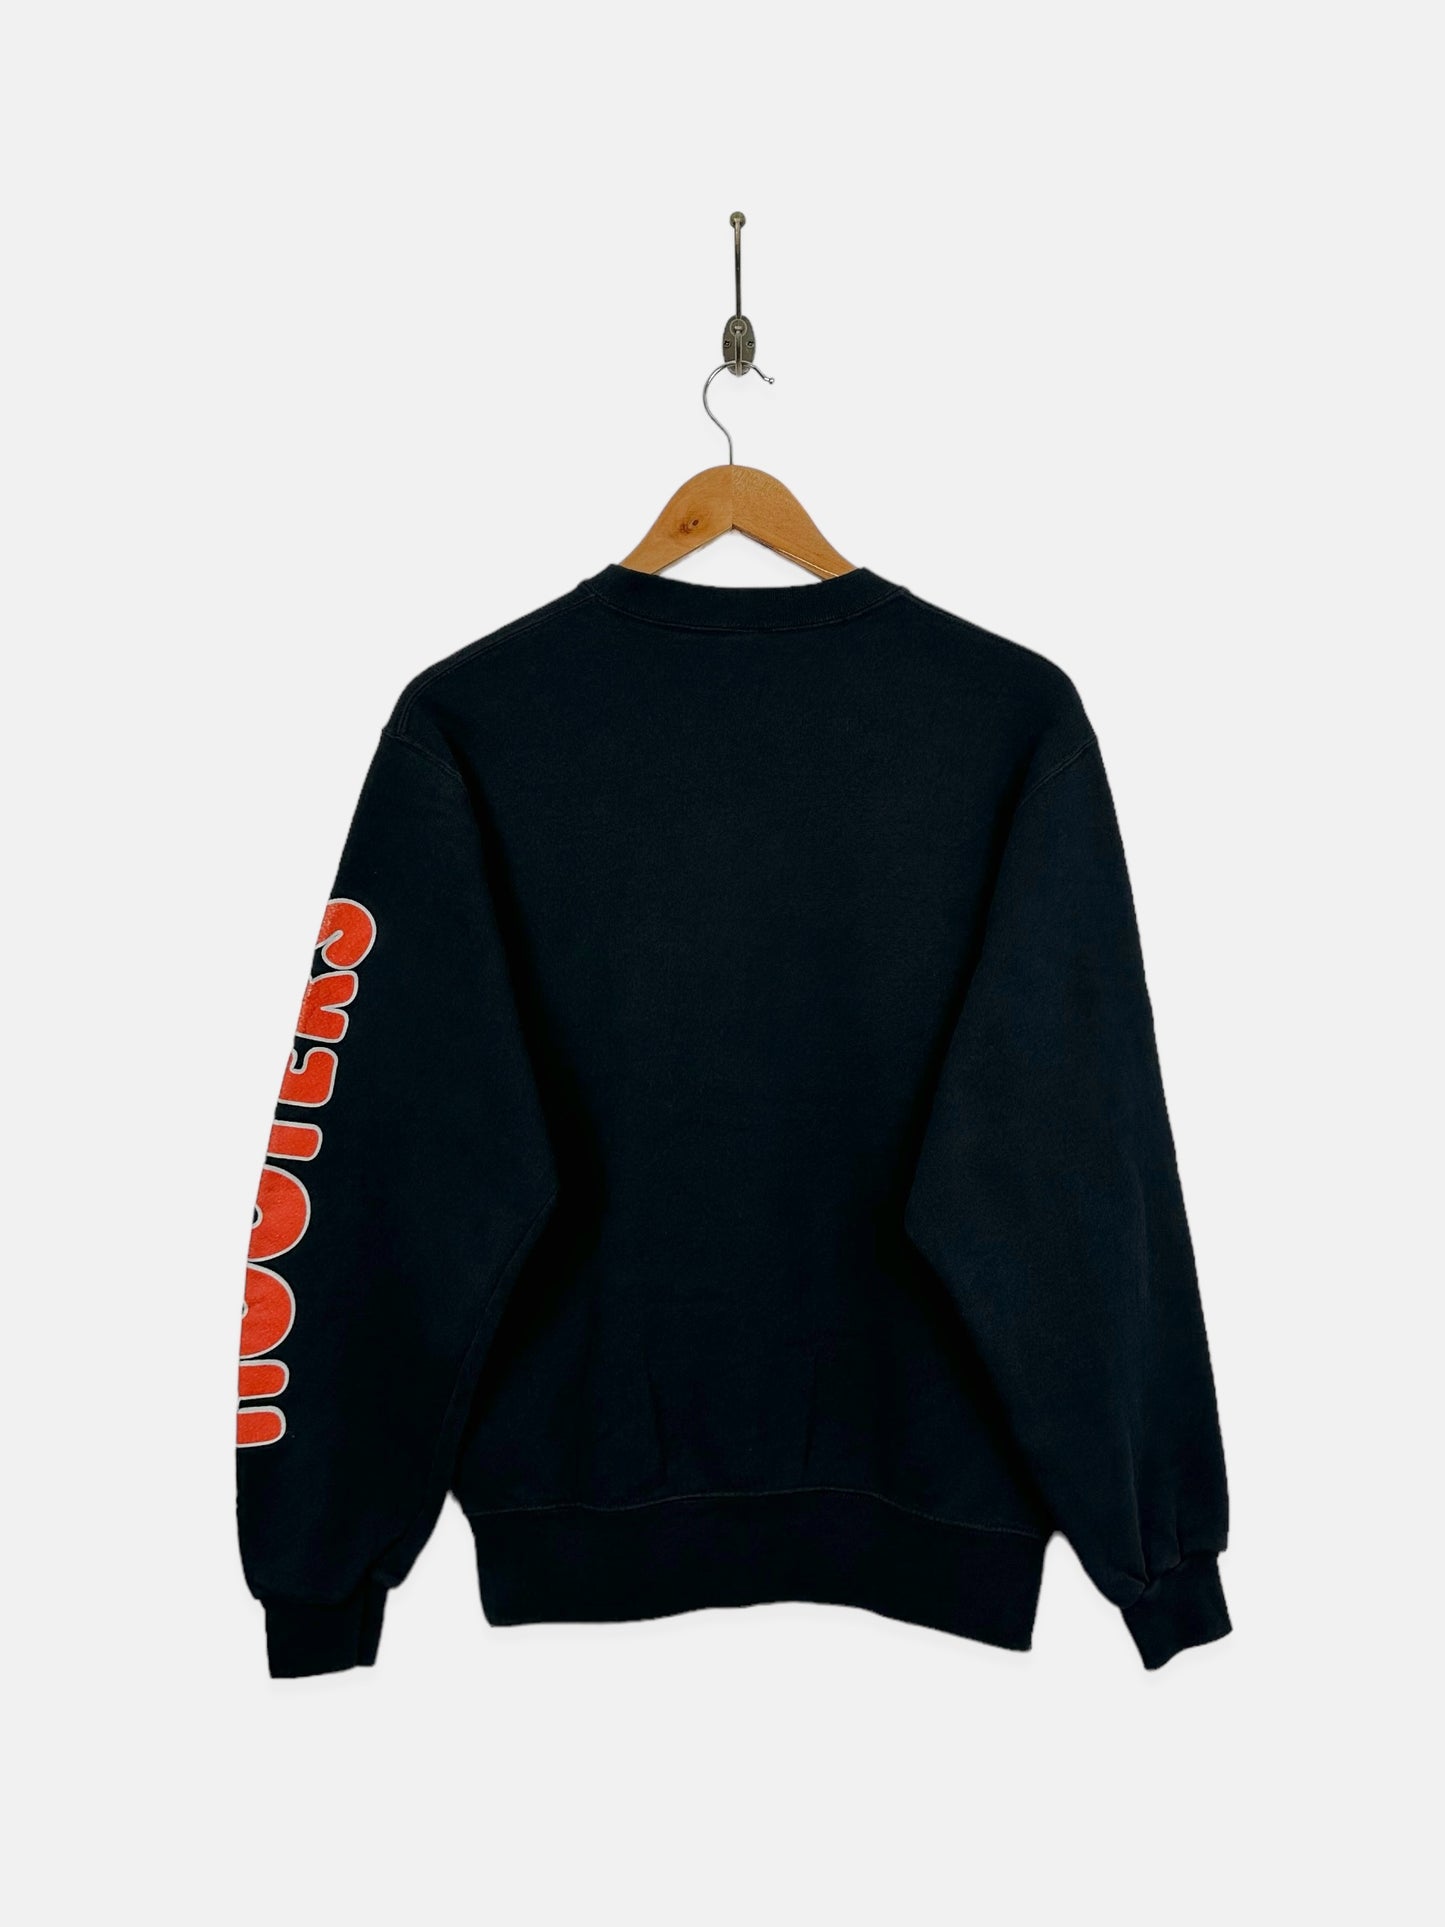 90's Hooters USA Made Vintage Sweatshirt Size 6